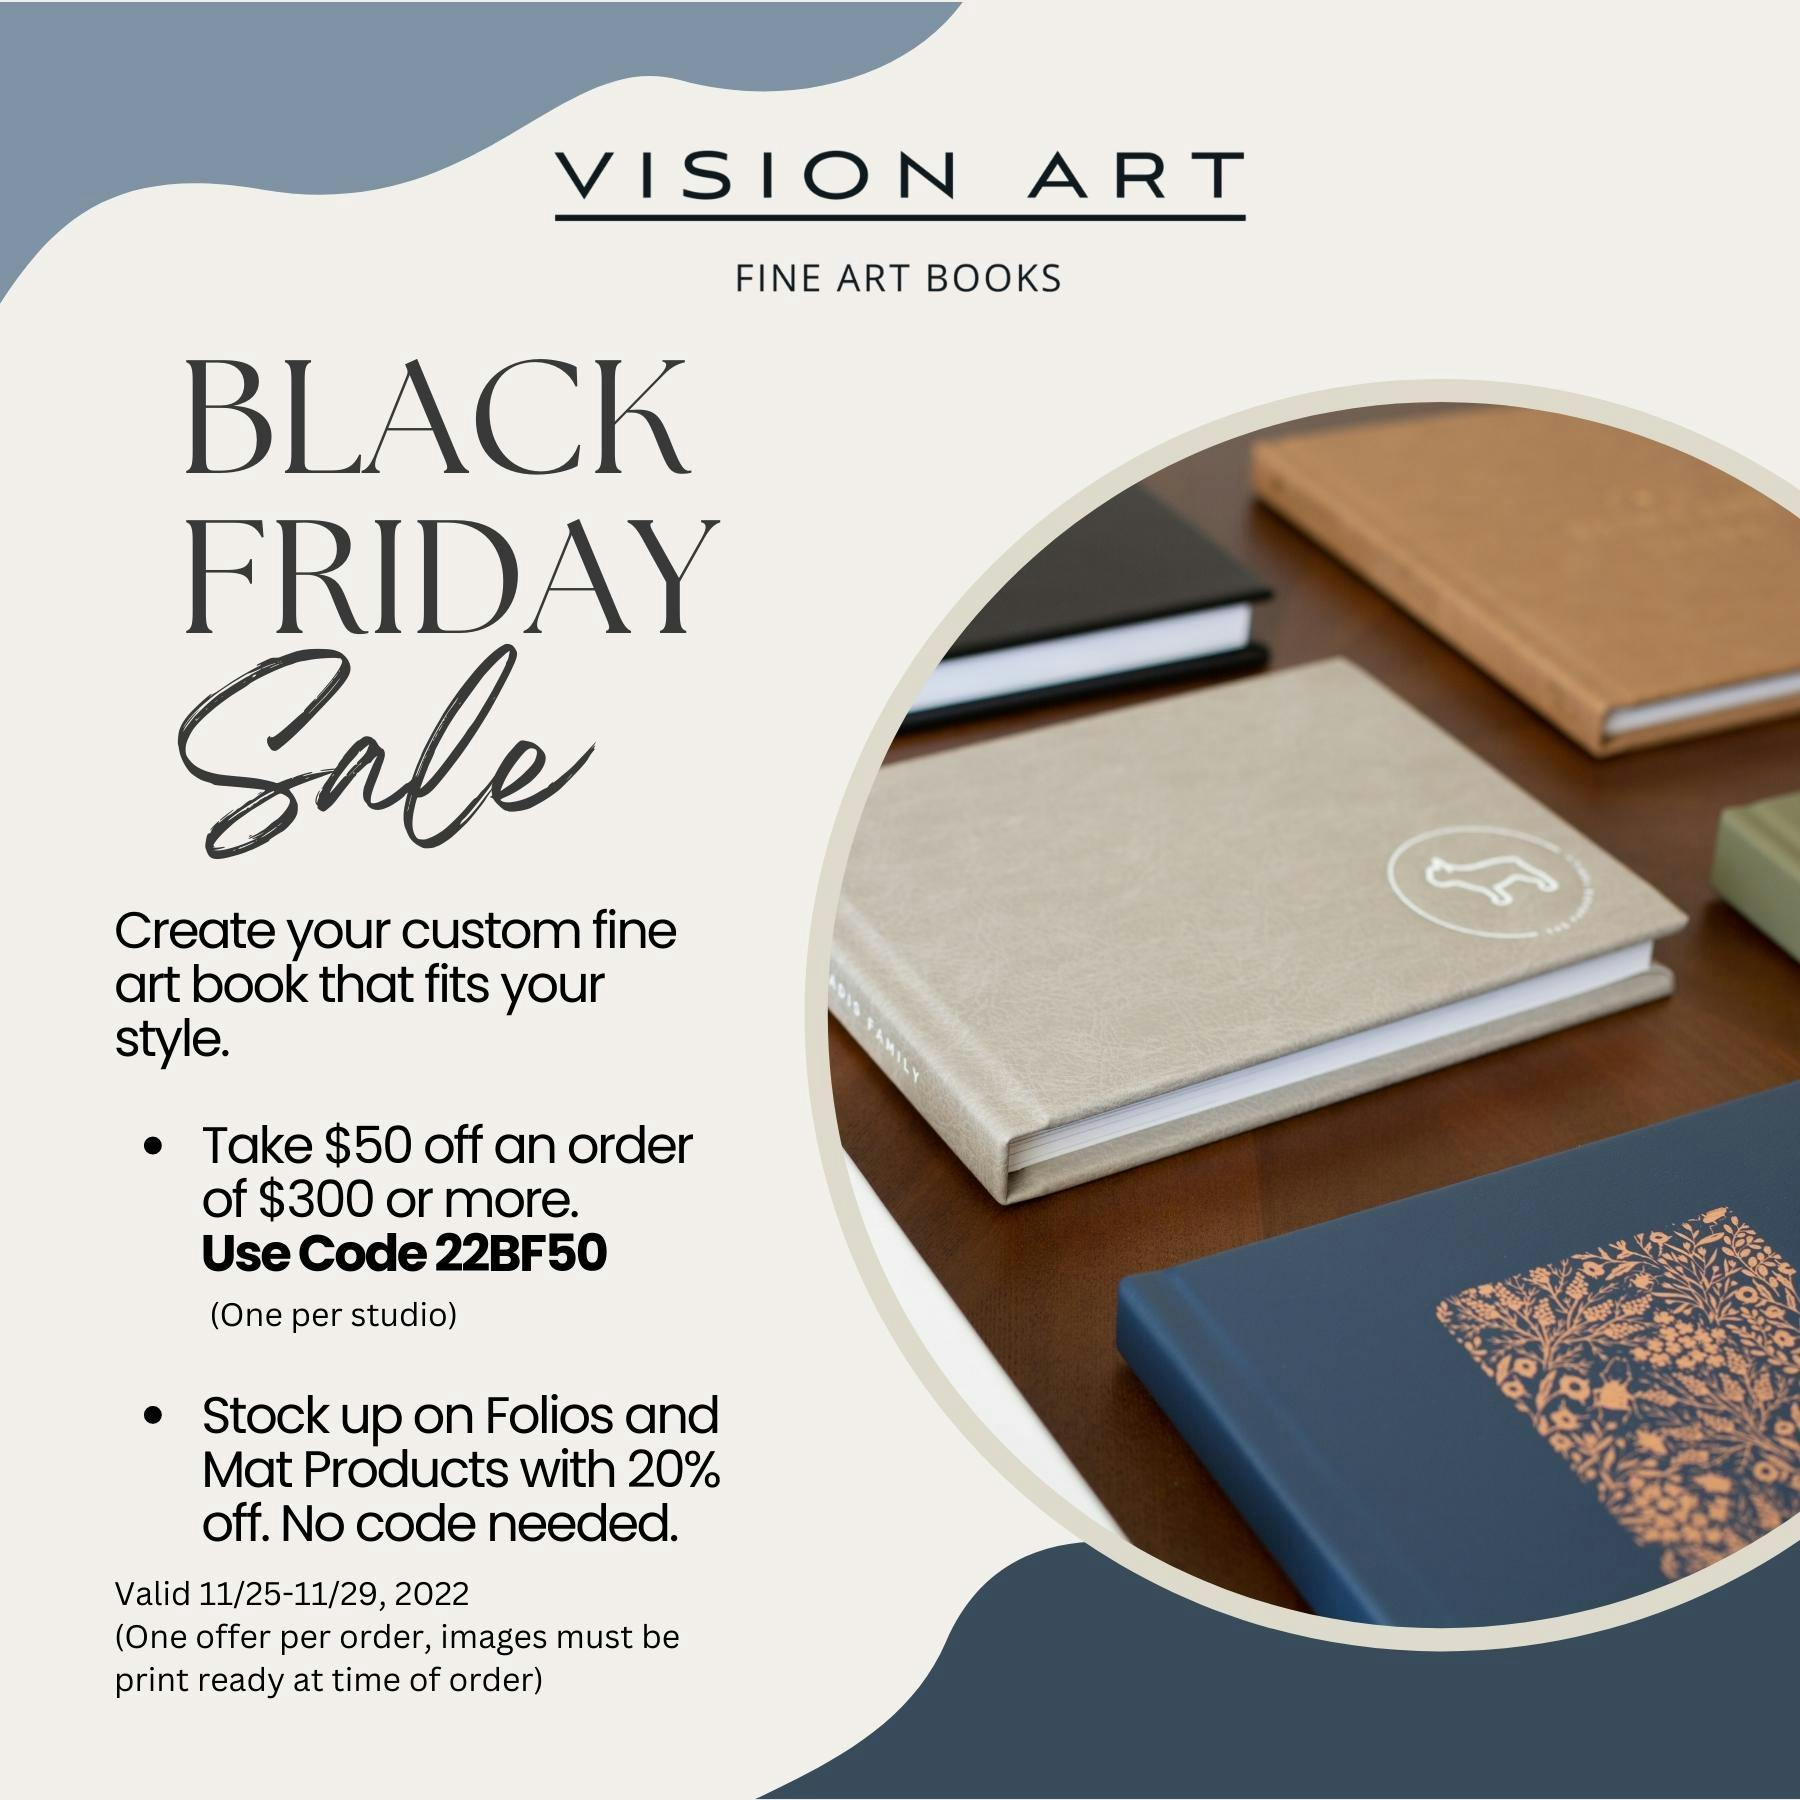 Vision Art Black Friday photography deals